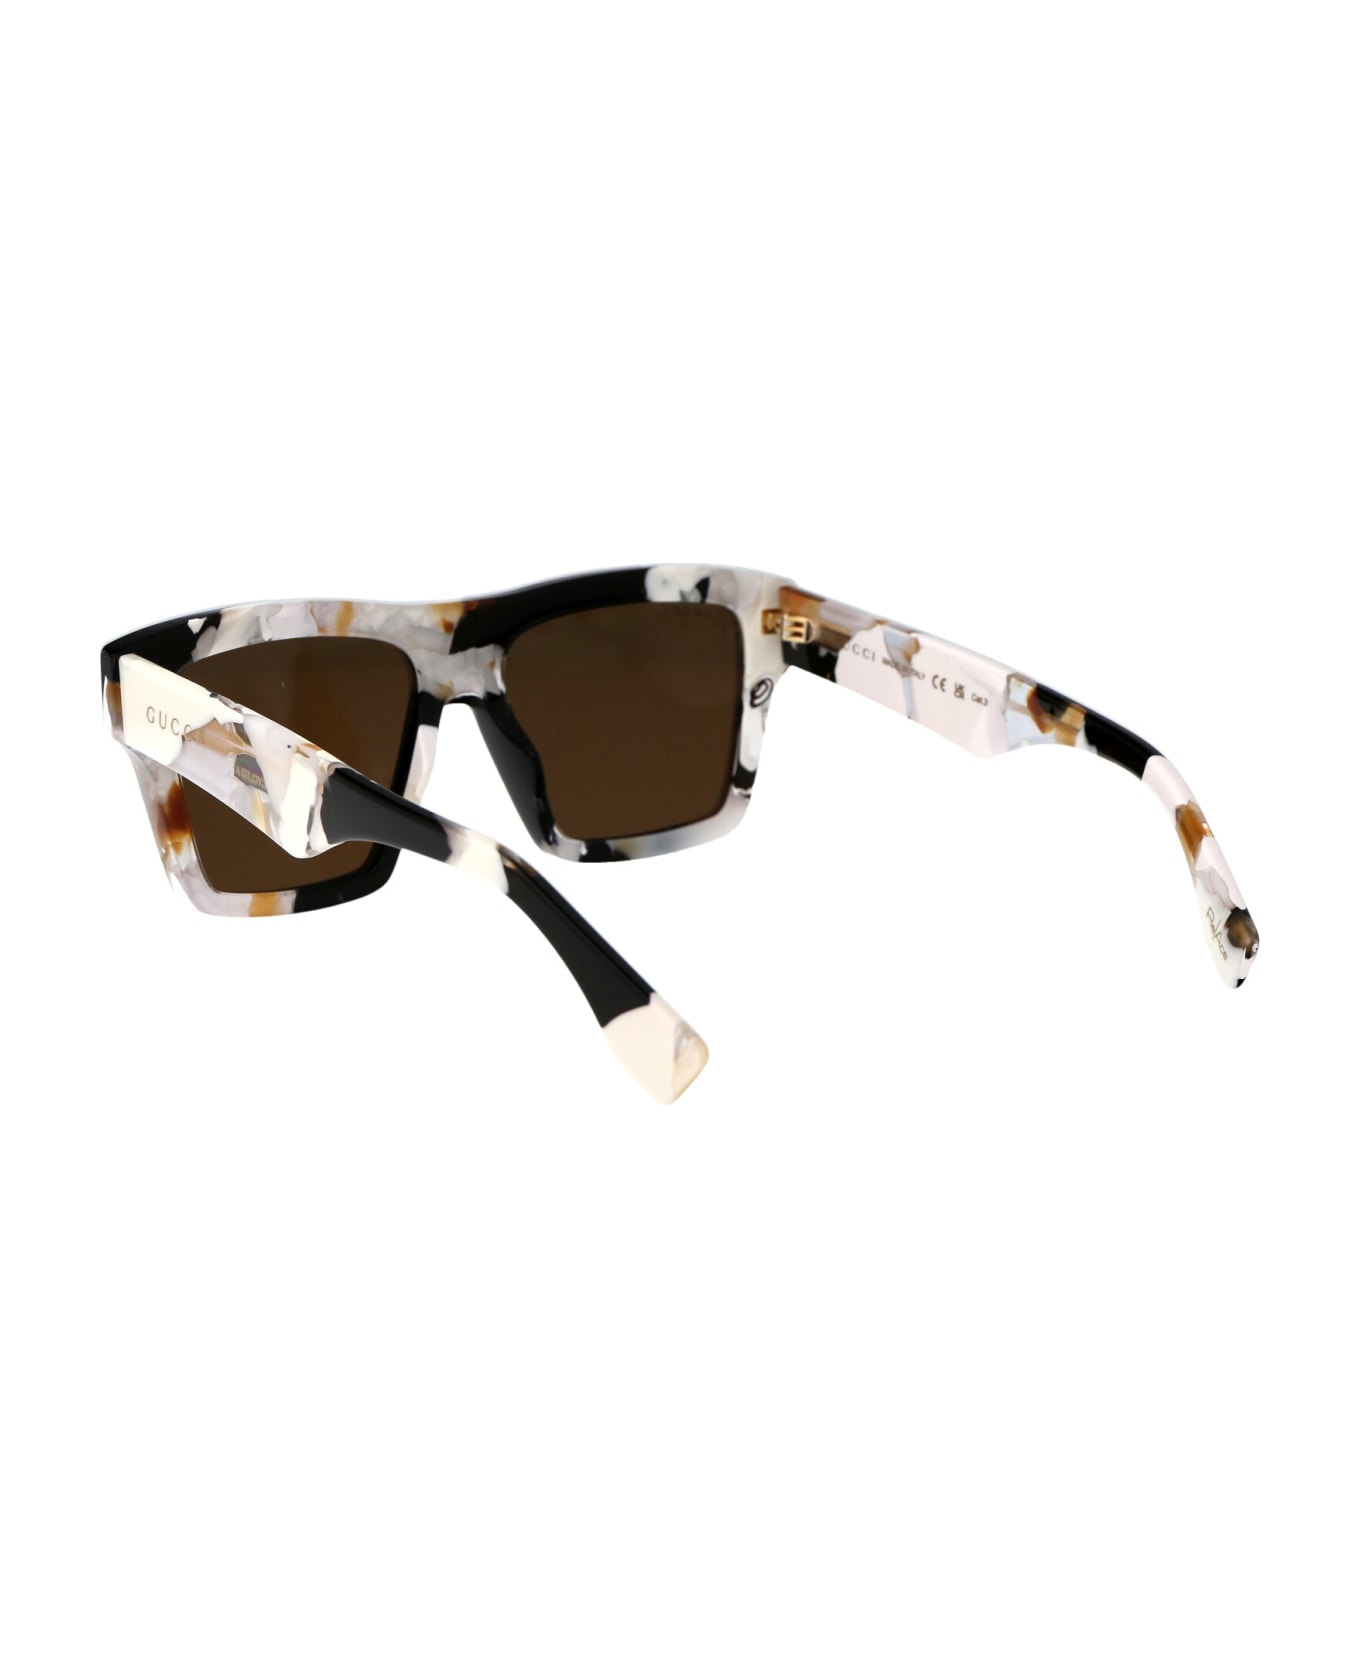 Gucci Eyewear Gg1623s Sunglasses - 002 WHITE WHITE BROWN サングラス